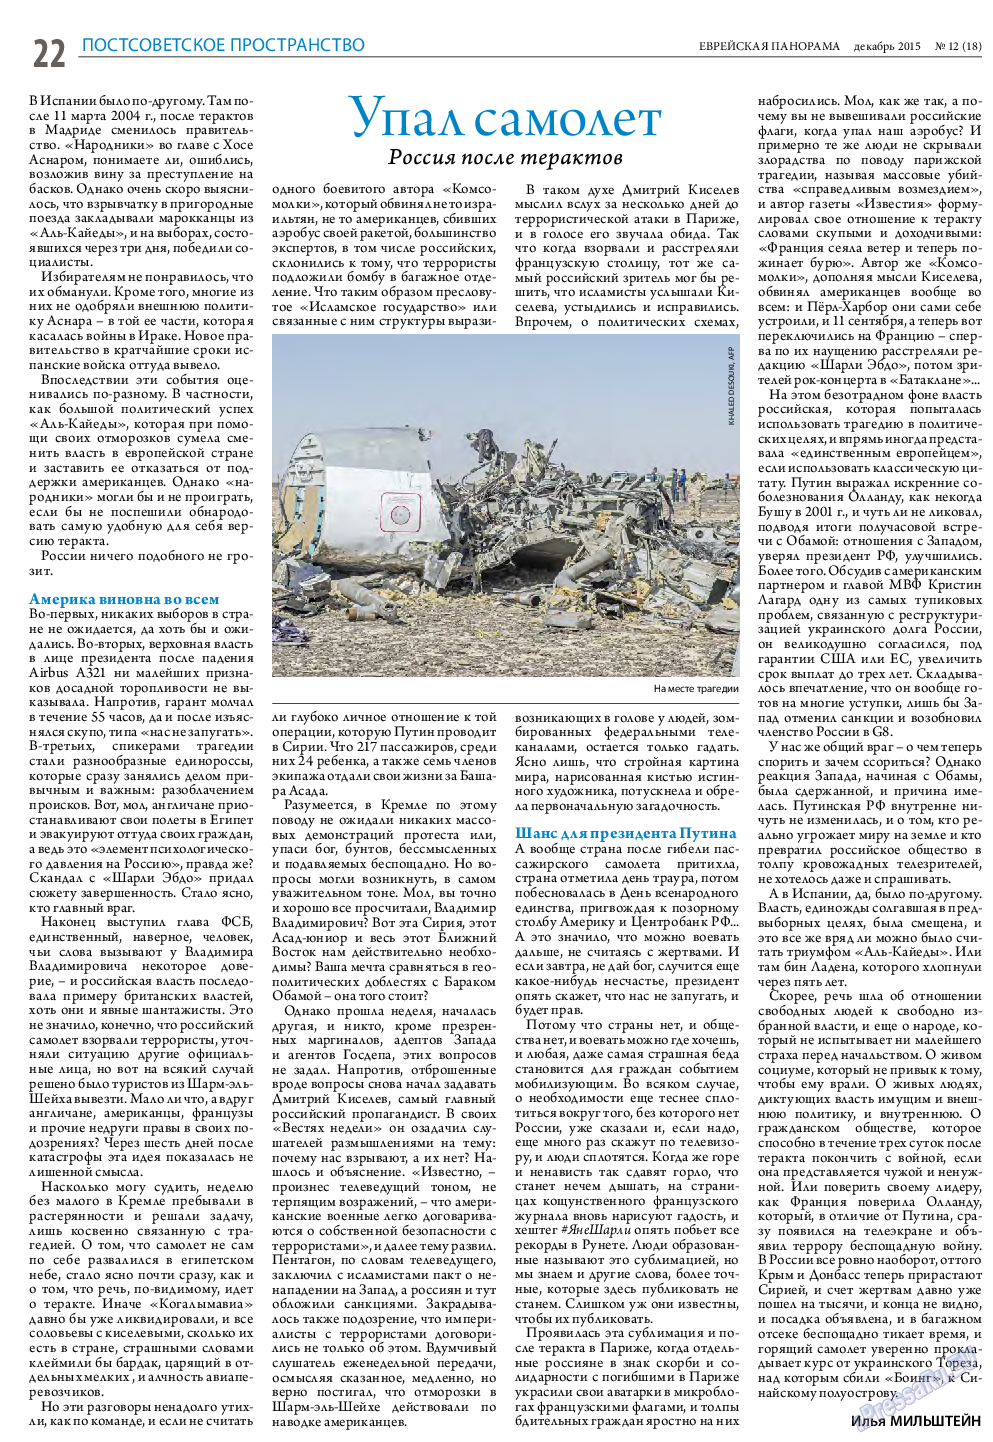 Еврейская панорама, газета. 2015 №12 стр.22